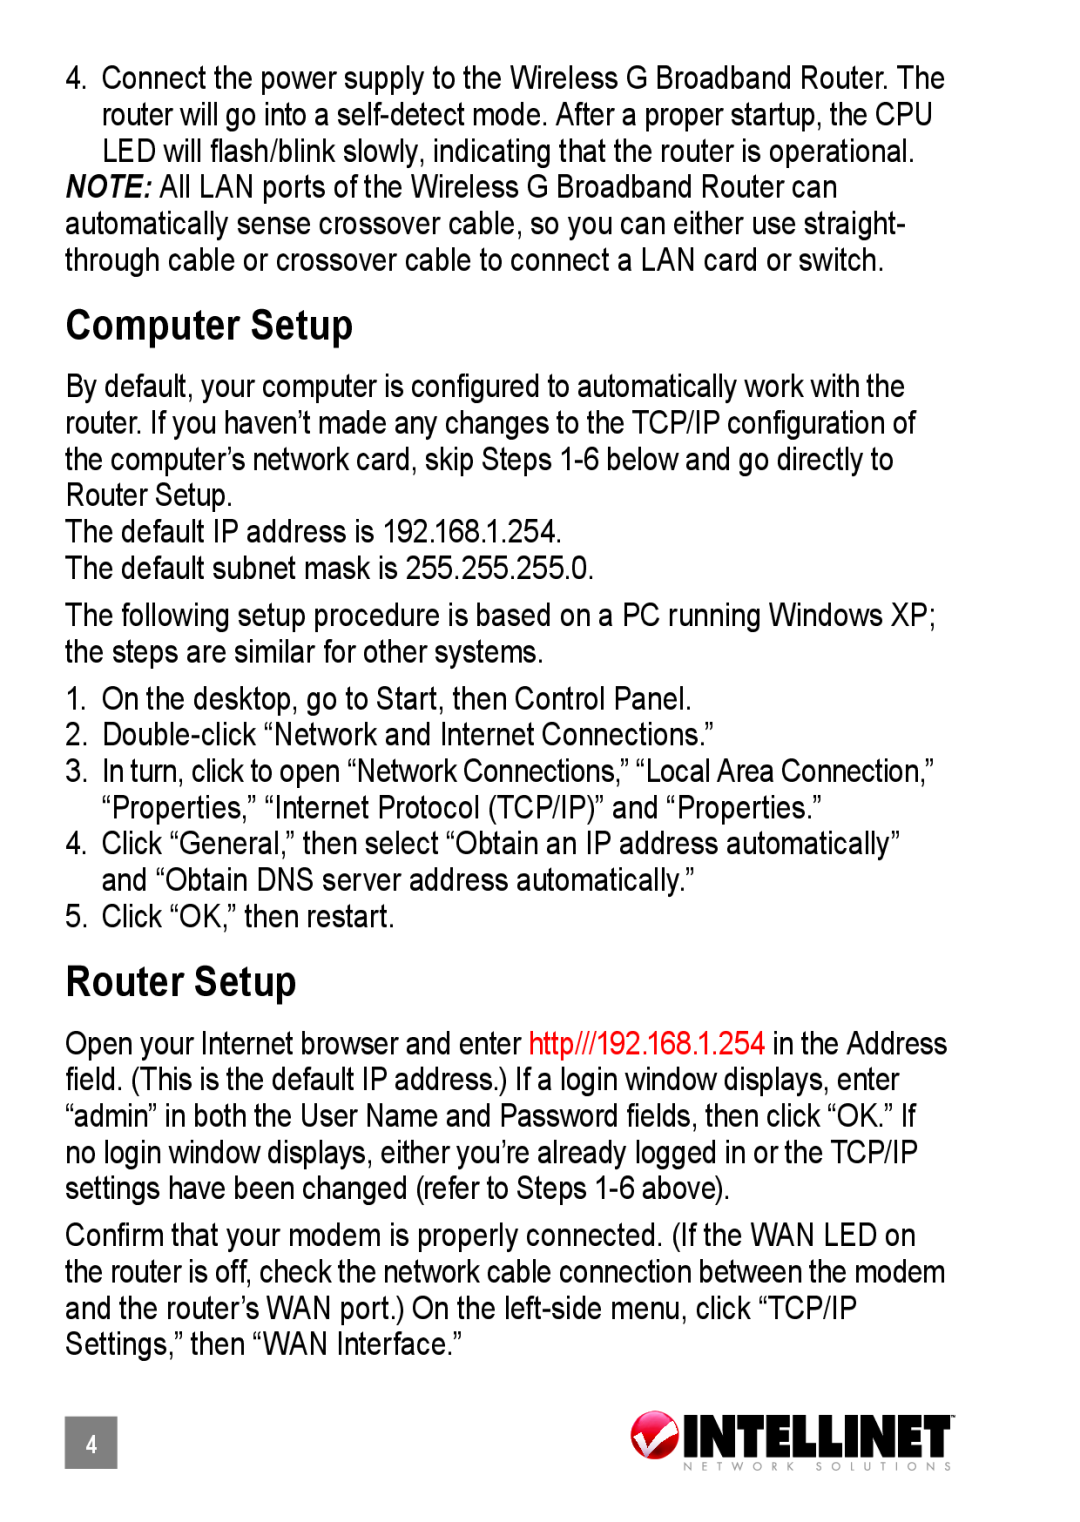 Intellinet Network Solutions 503693 manual Computer Setup, Router Setup 